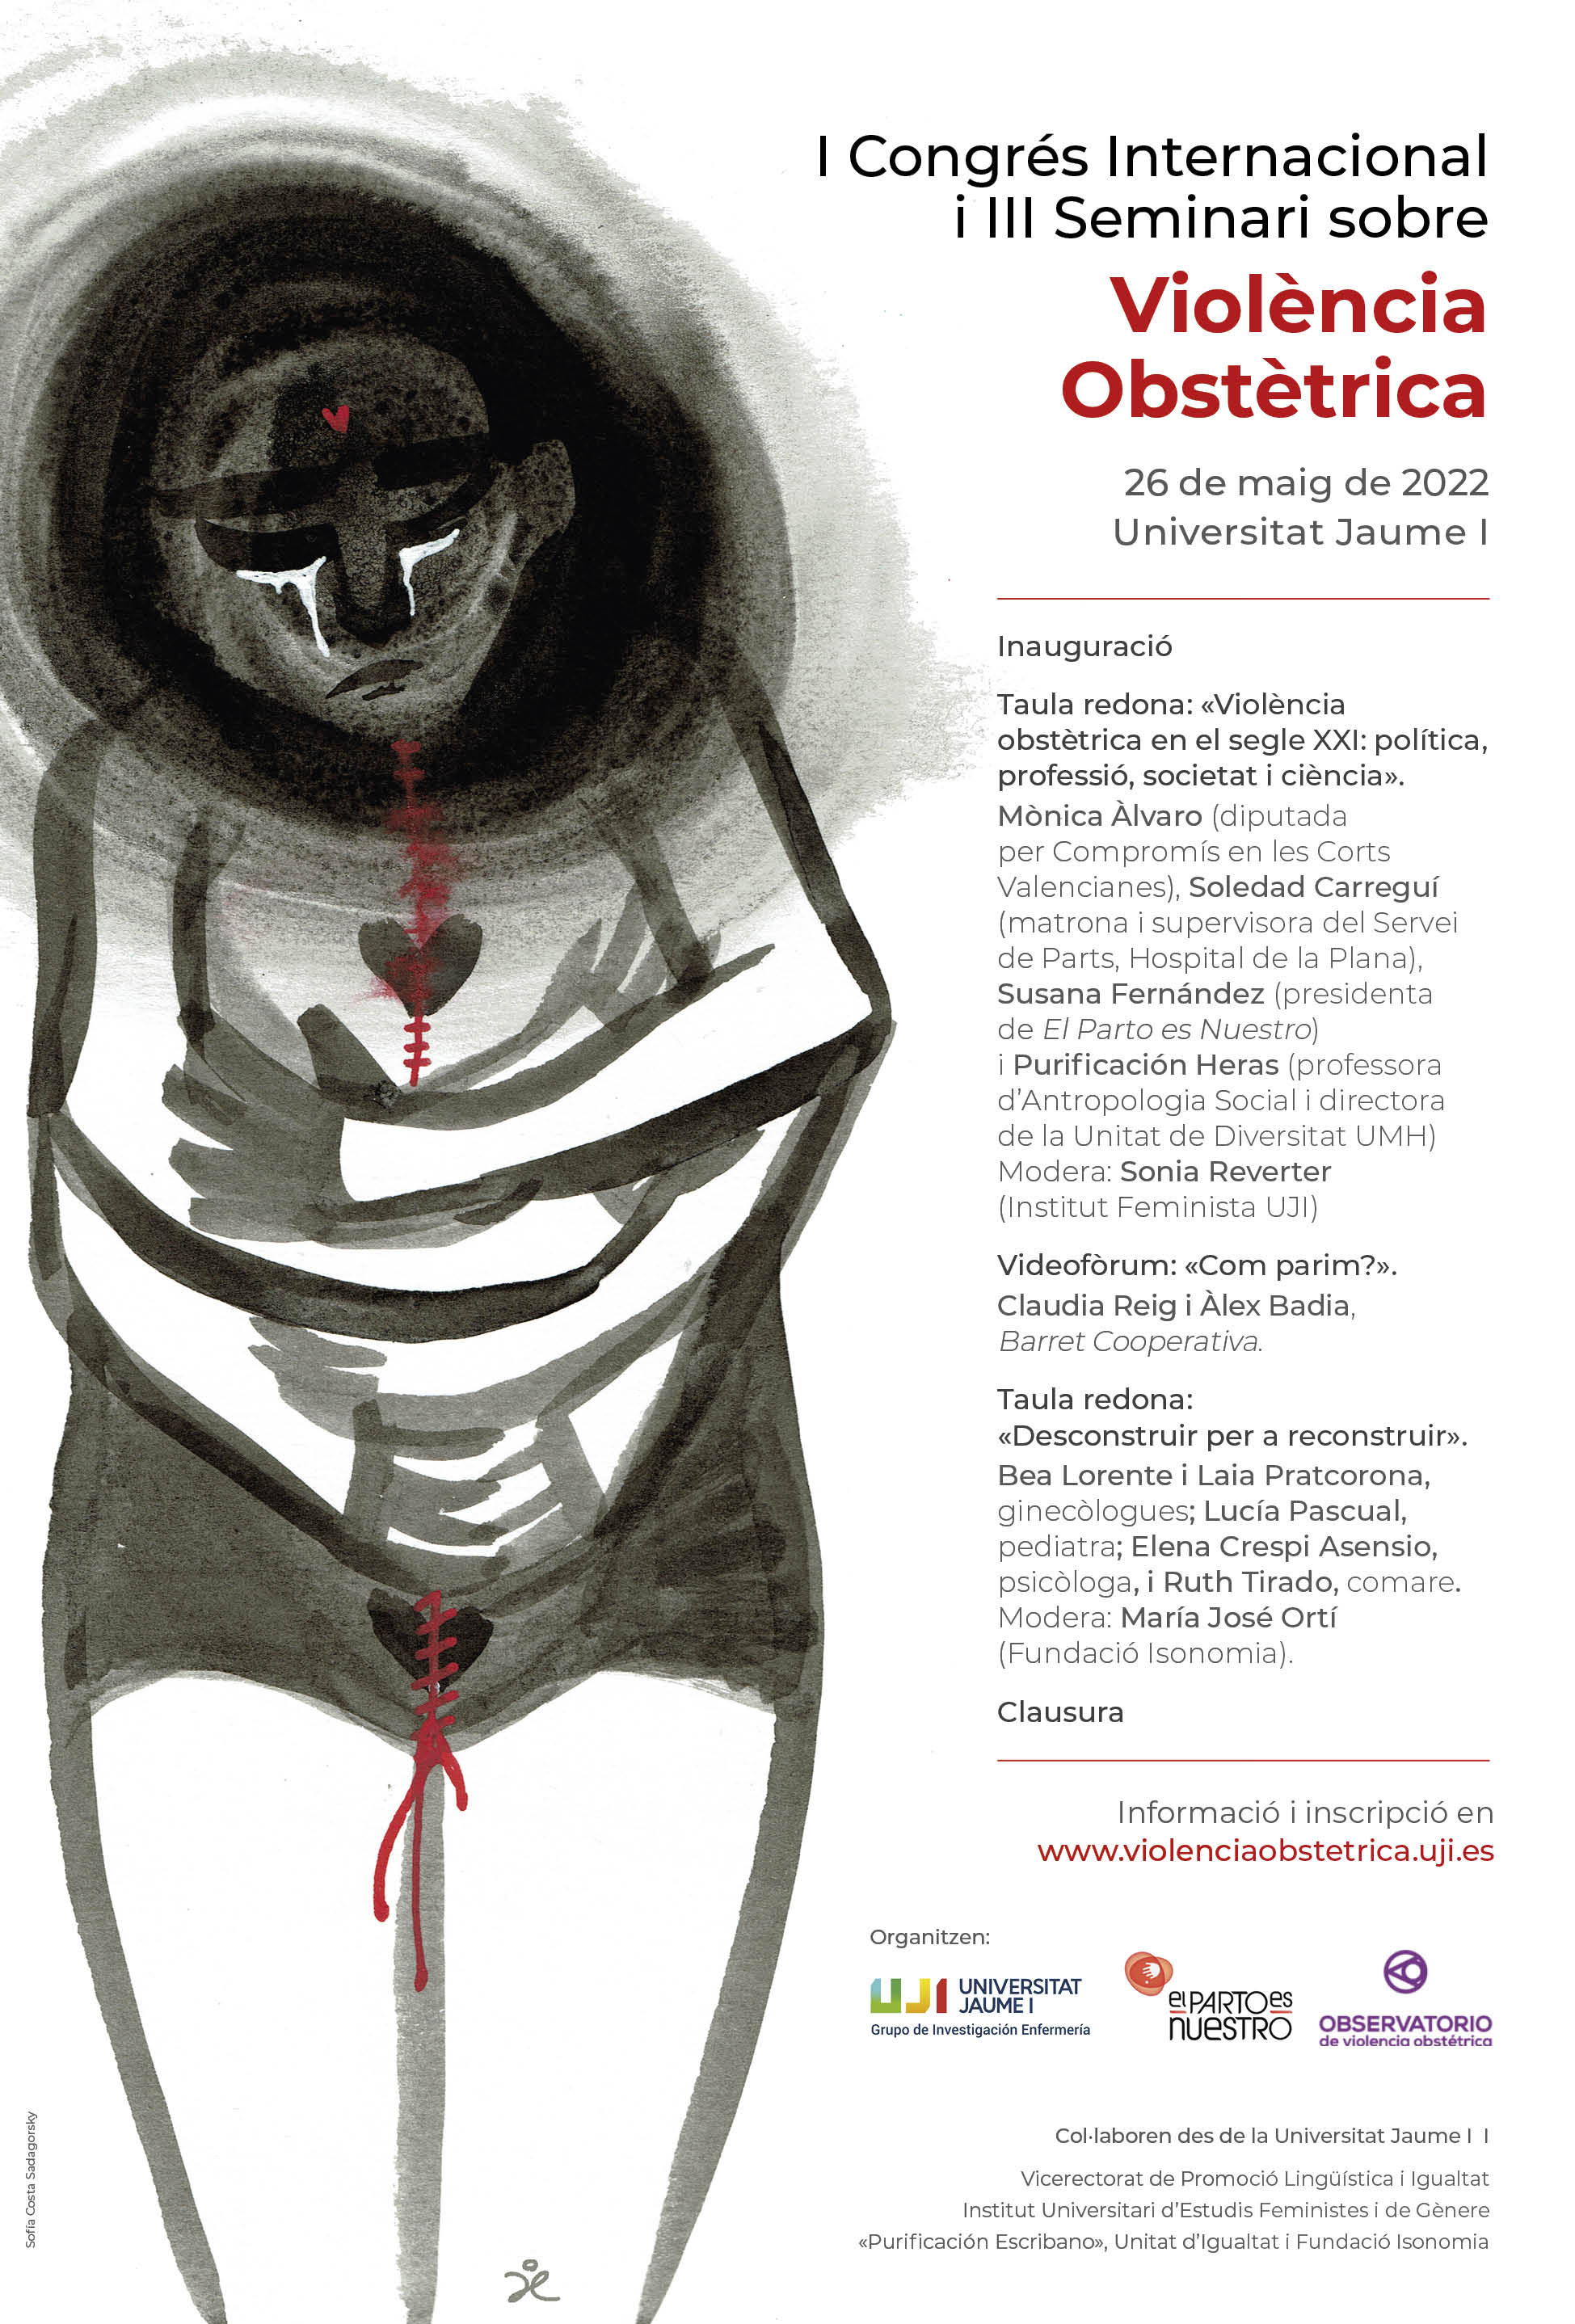  seminari-violencia-obstetrica CartellIIISeminariInternacionalViolnciaObsttrica_cast_v2